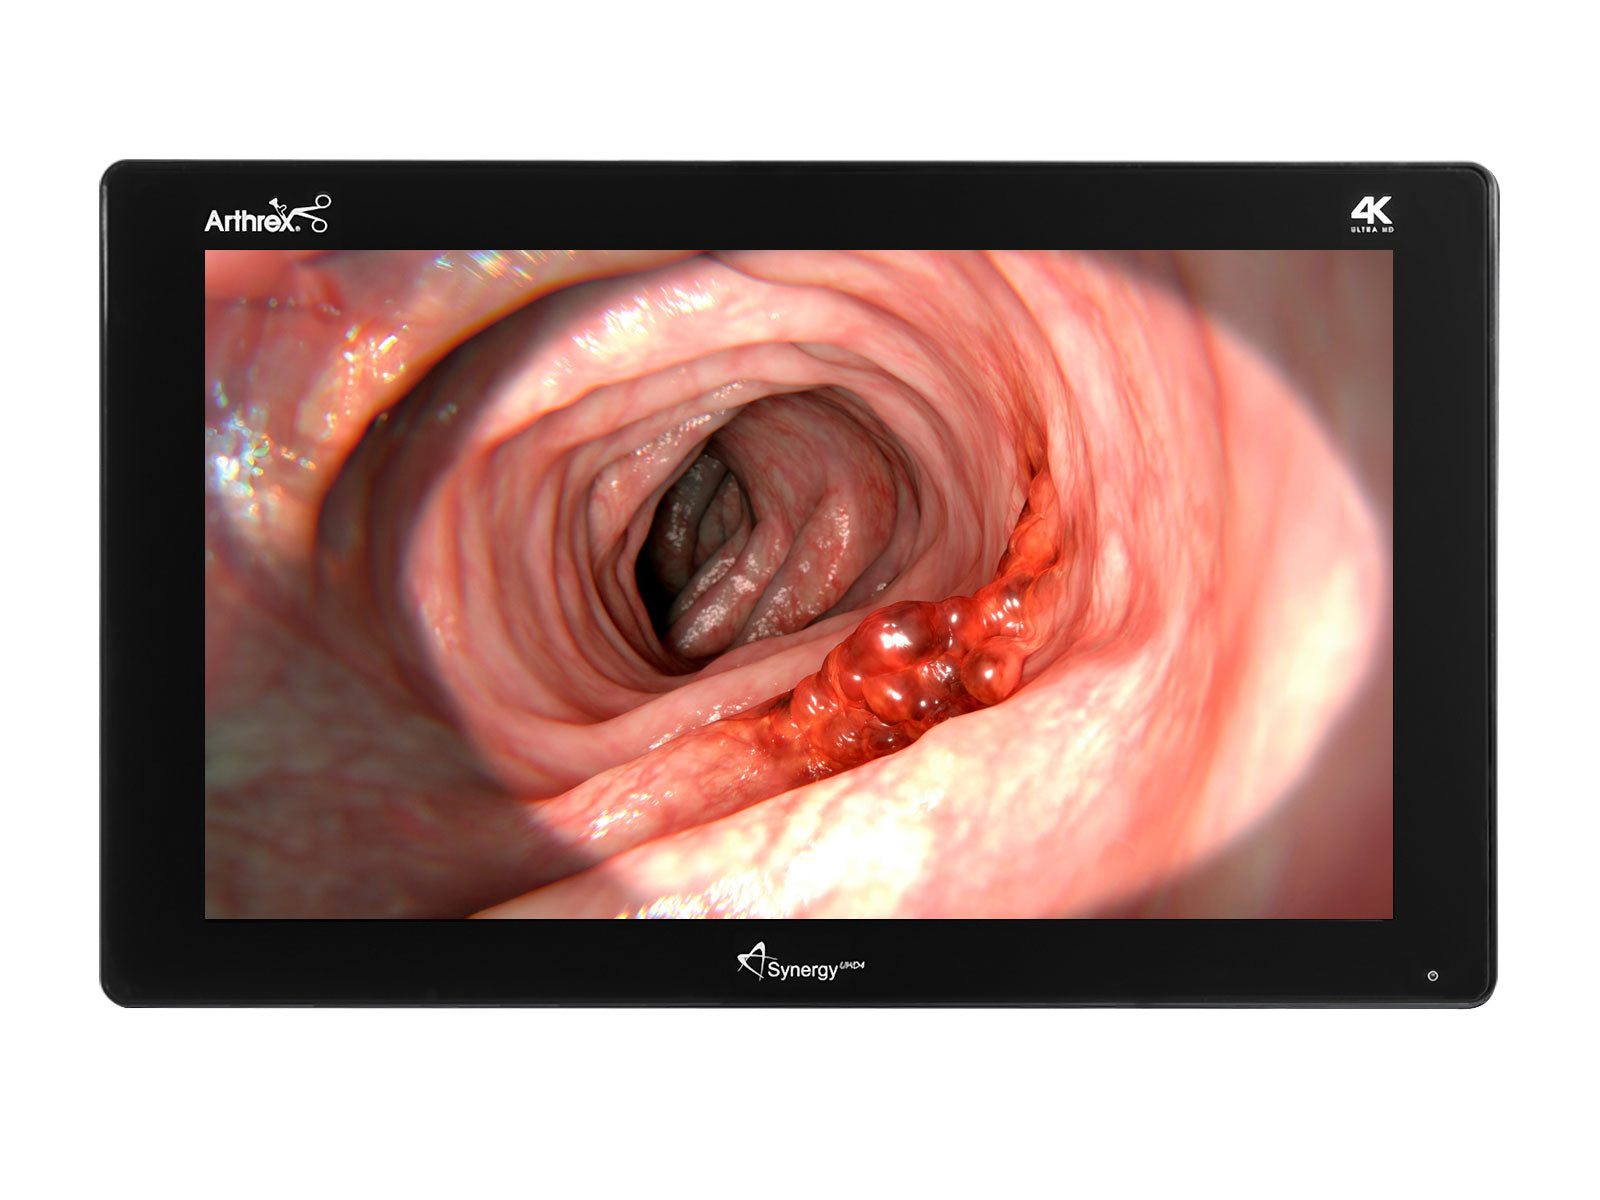 Barco Sinergia ArthrexUHD4 Monitor de pantalla médica quirúrgica en color 32K de 4" (AR-3250-3210)